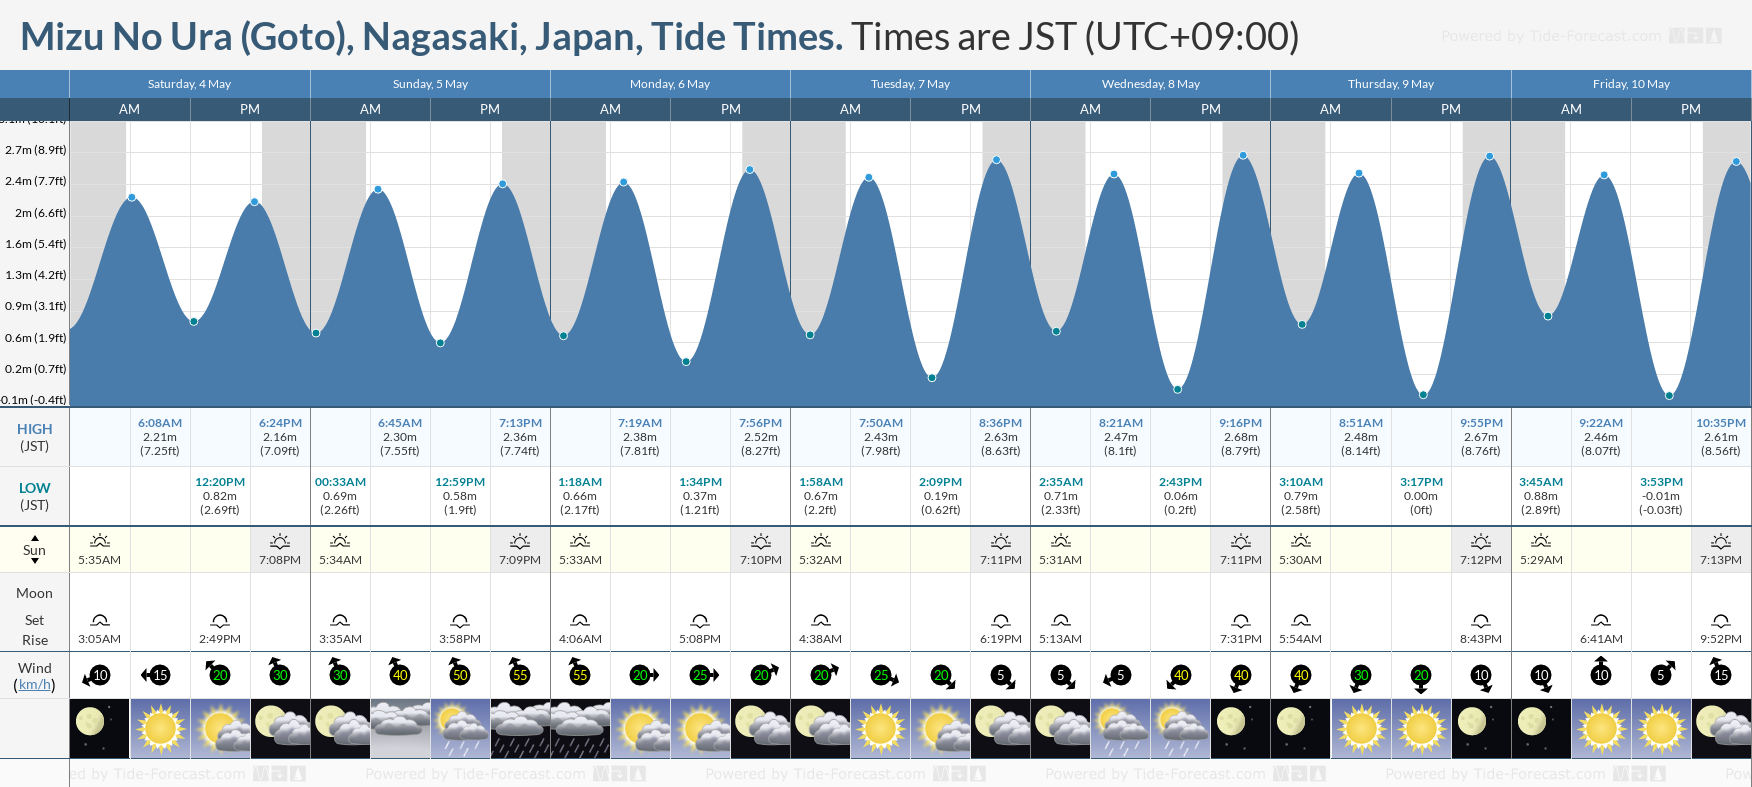 Mizu No Ura (Goto), Nagasaki, Japan Tide Chart including high and low tide tide times for the next 7 days